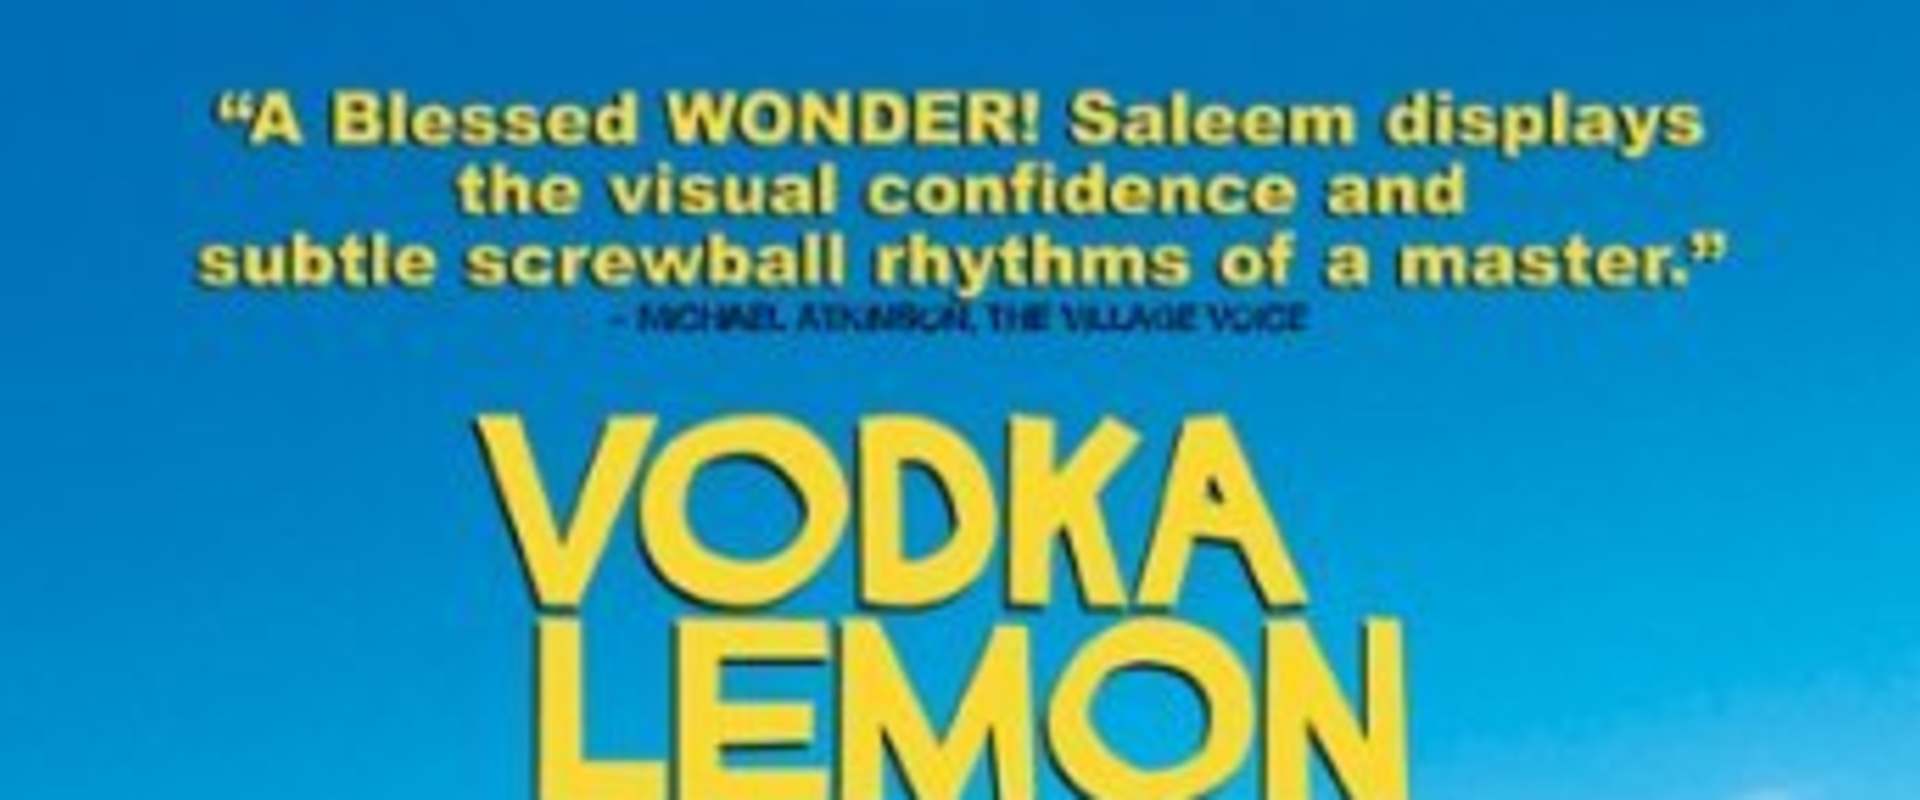 Vodka Lemon background 2